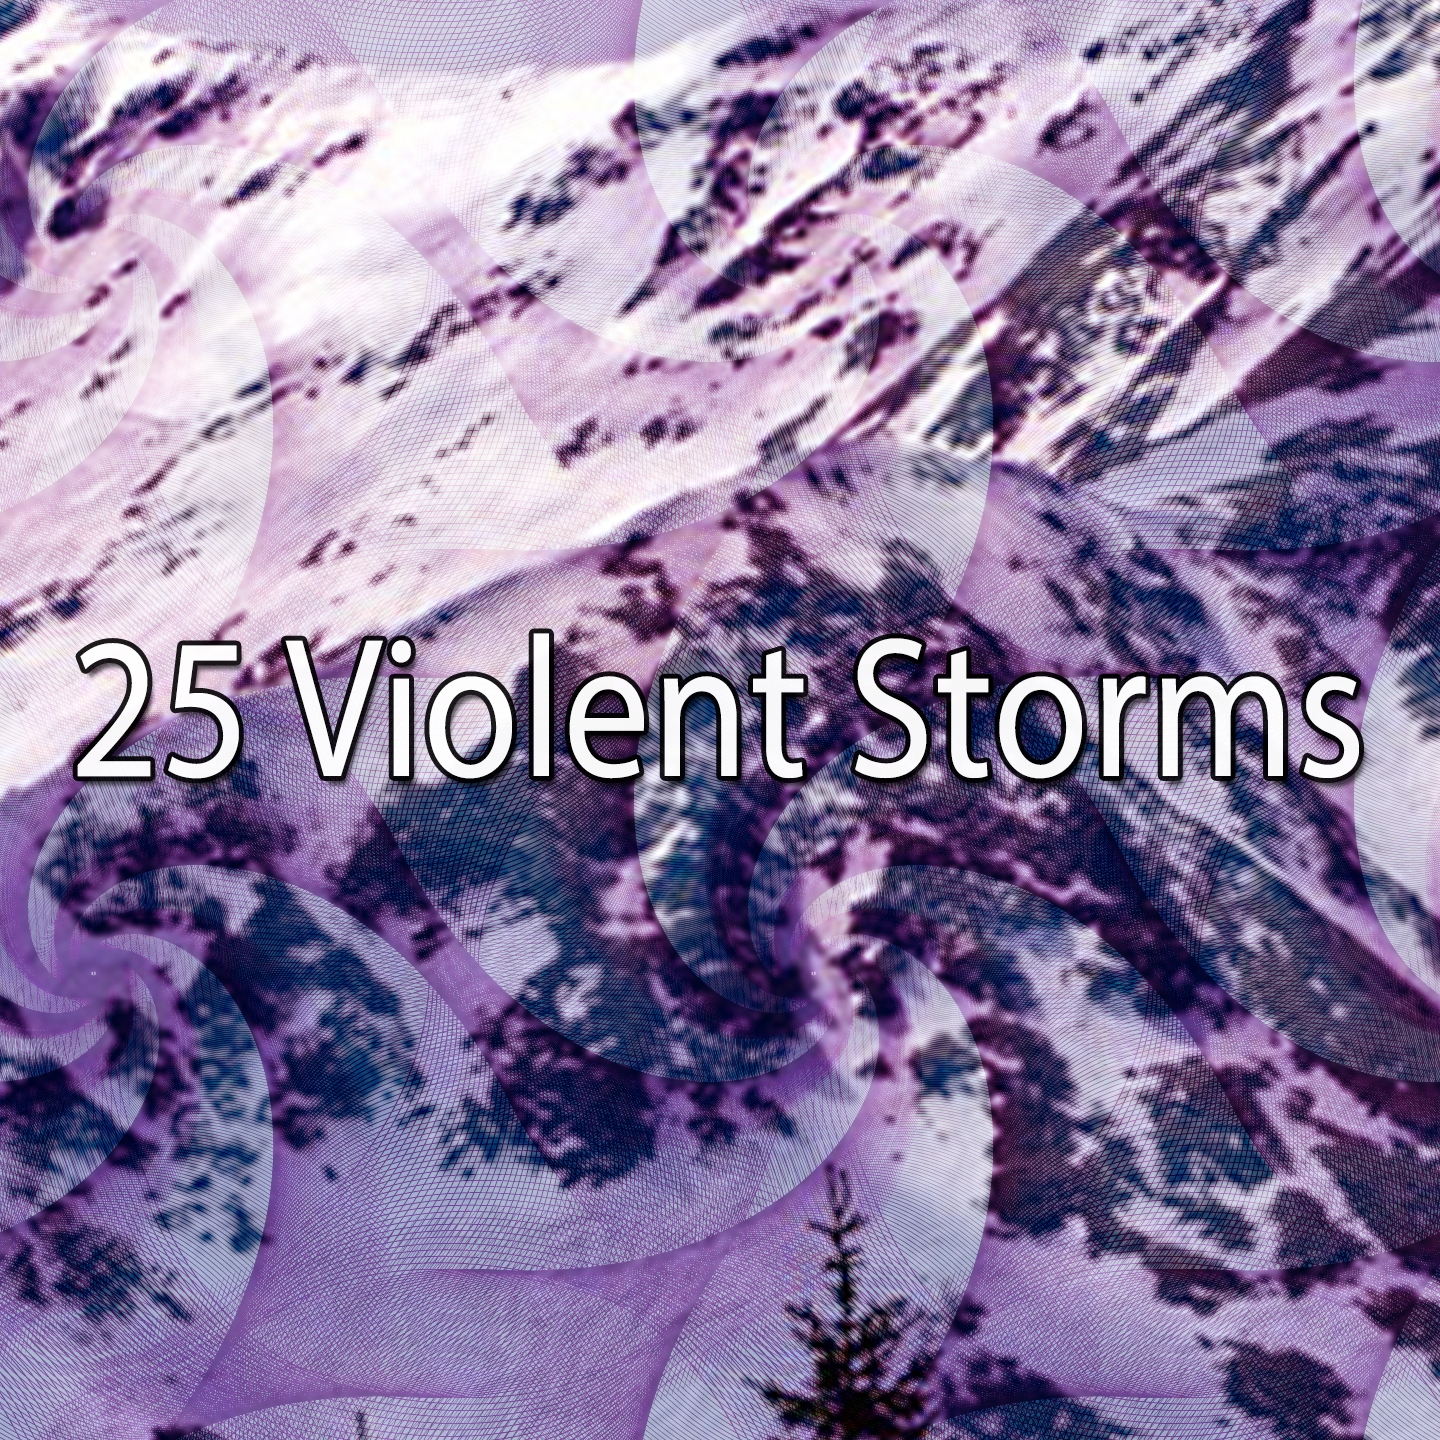 25 Violent Storms